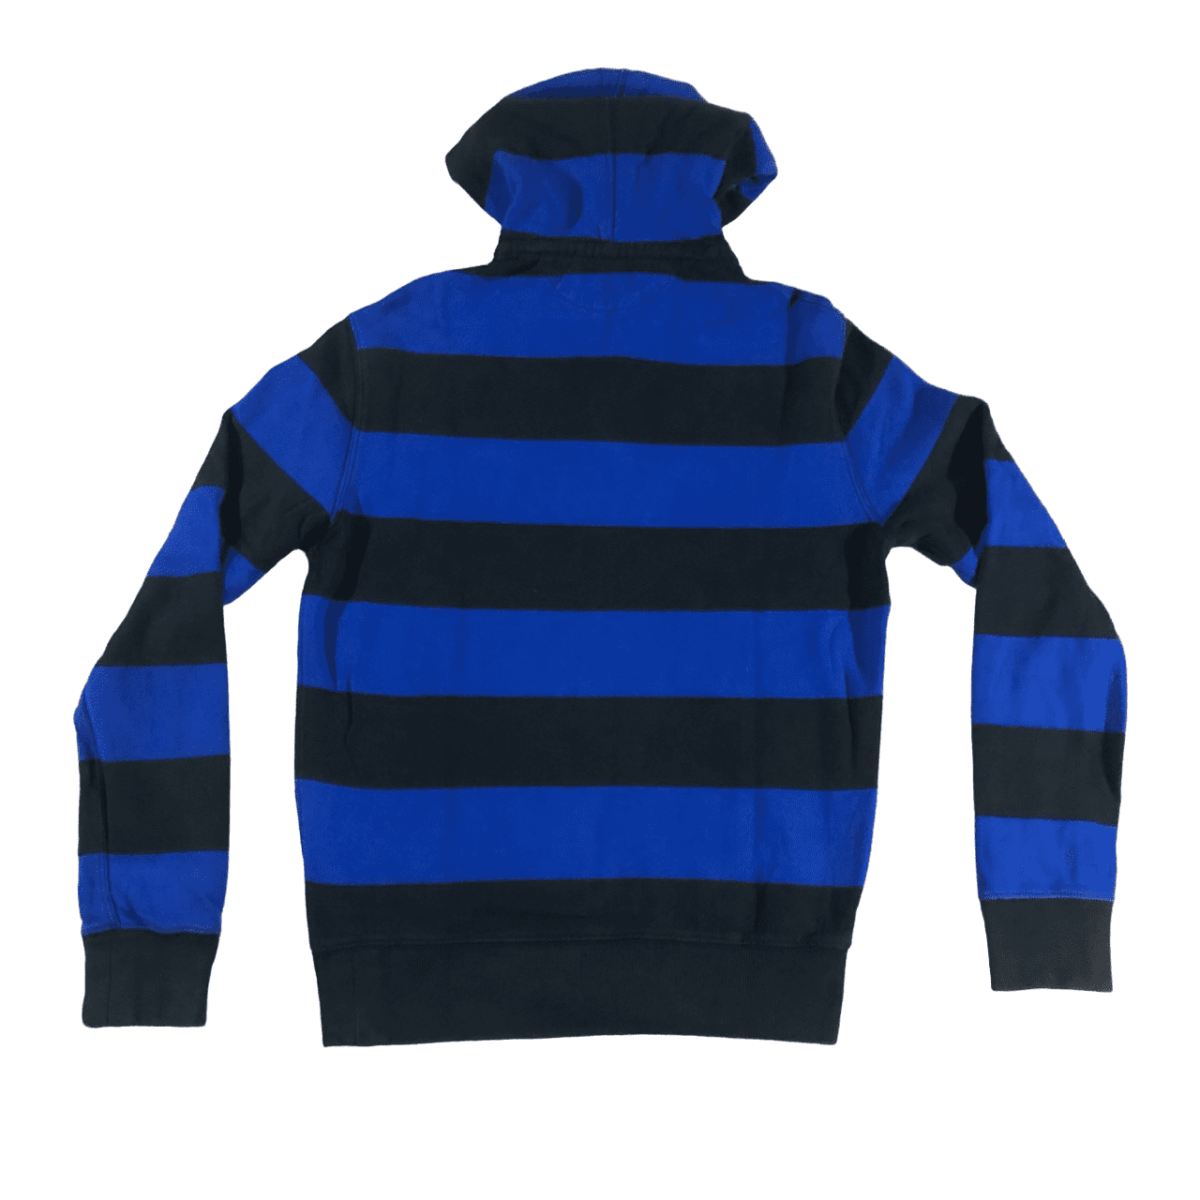 Hoodie Polo Ralph Lauren stripes blue black